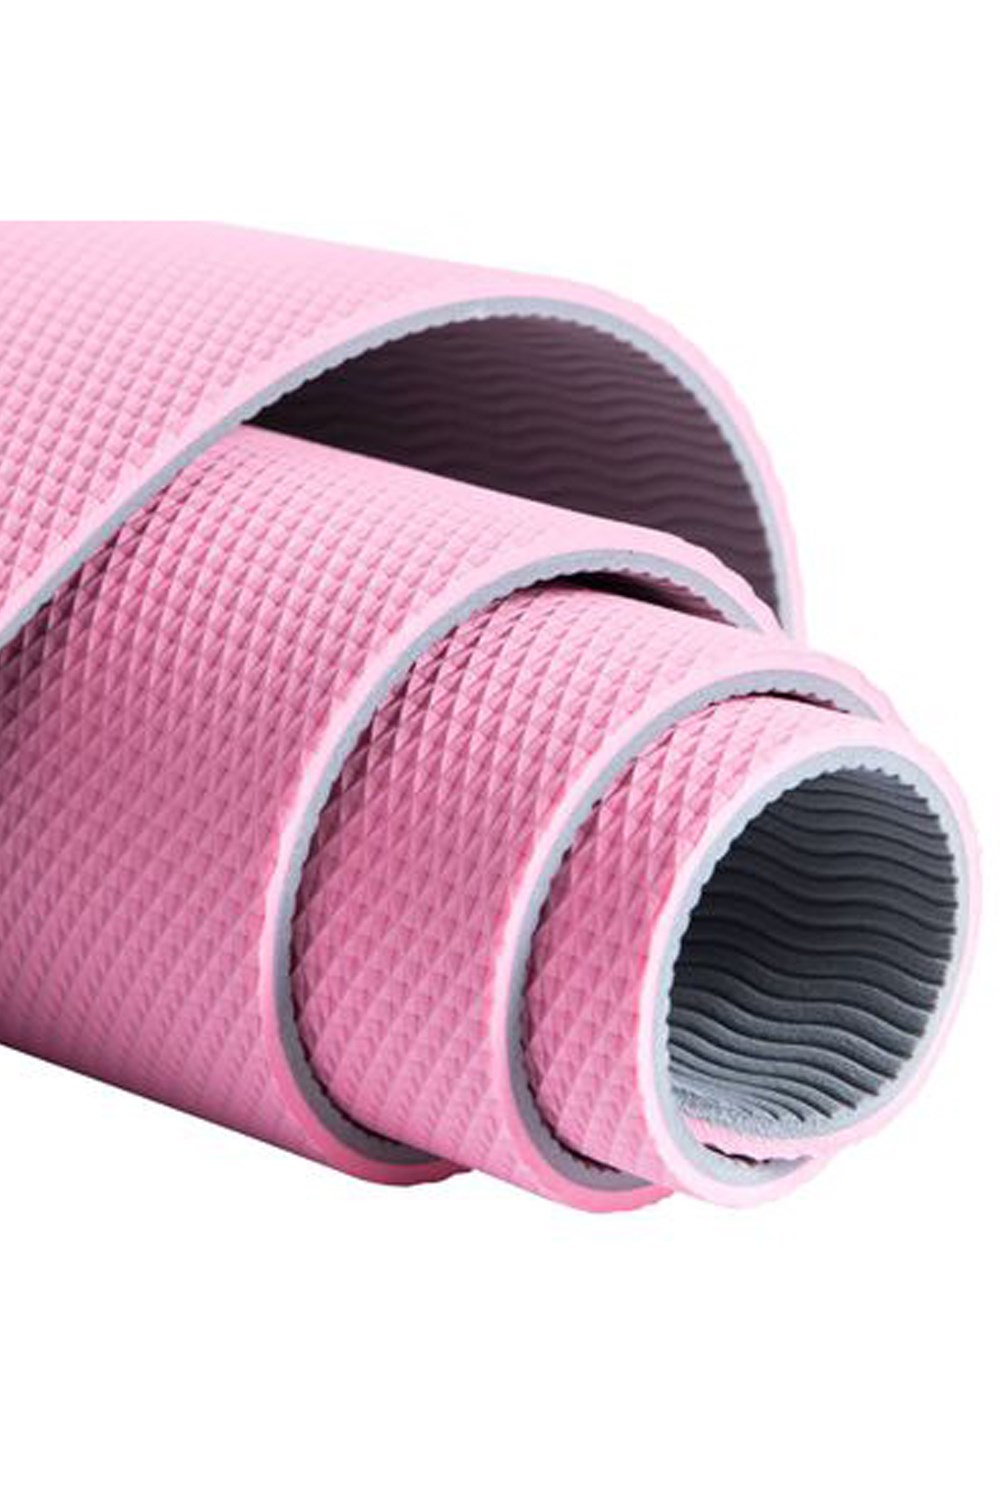 Future Way Non-Slip Yoga Mat w/ Carry Strap & Bag, Purple/Pink 72 x 24 x  1/4